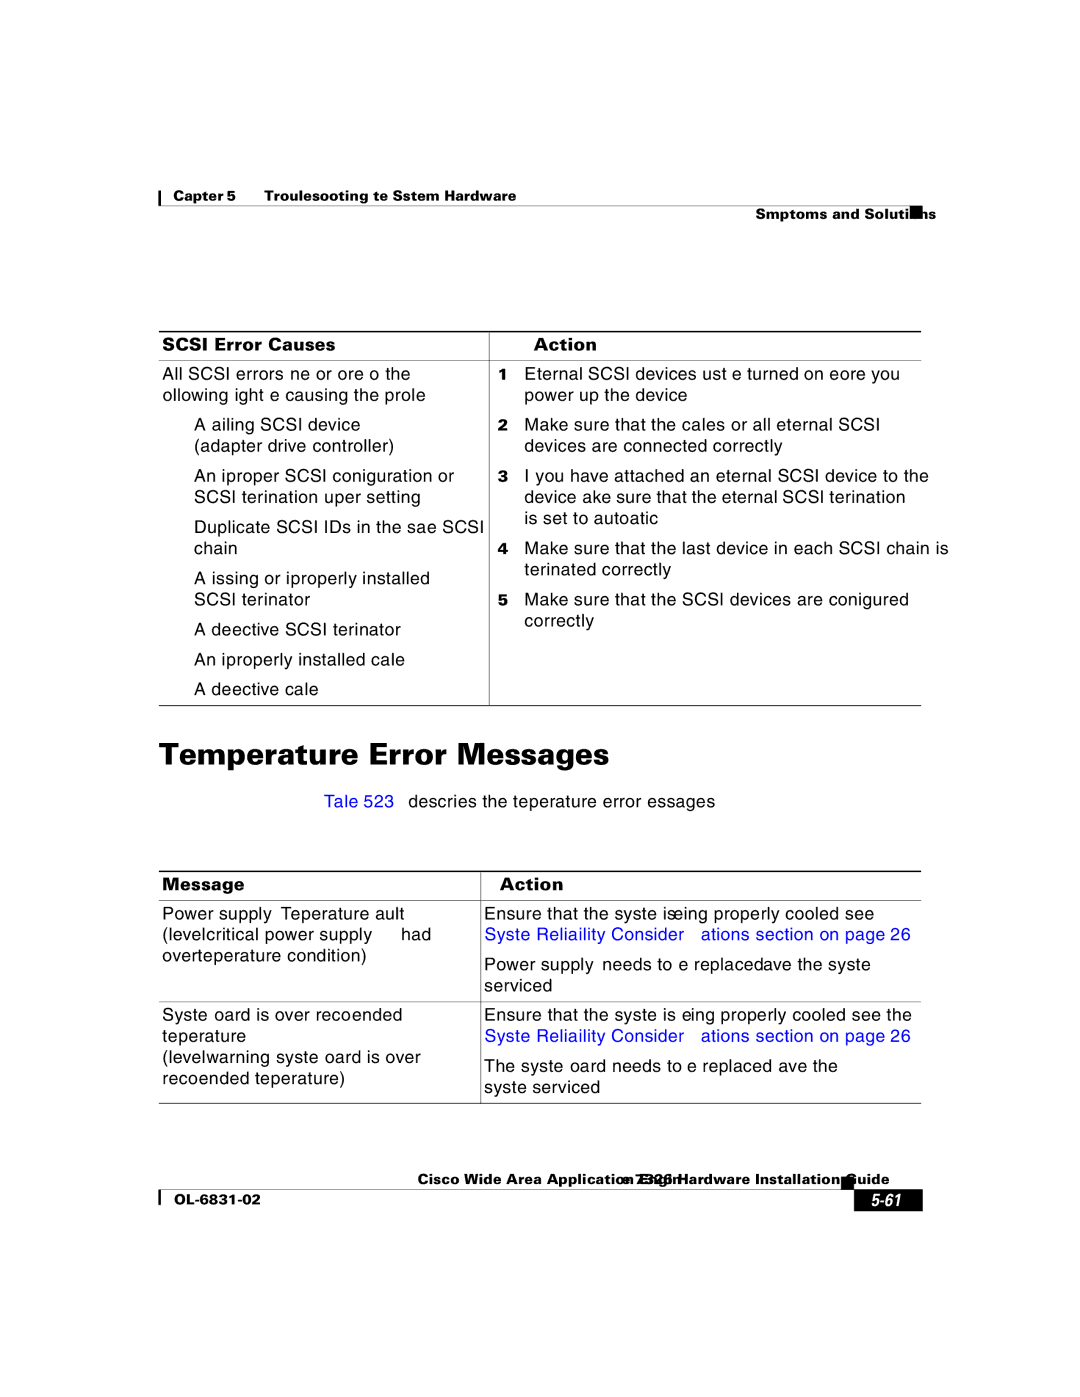 Cisco Systems 7326 manual Temperature Error Messages, Scsi Error Causes Action, Message Action 